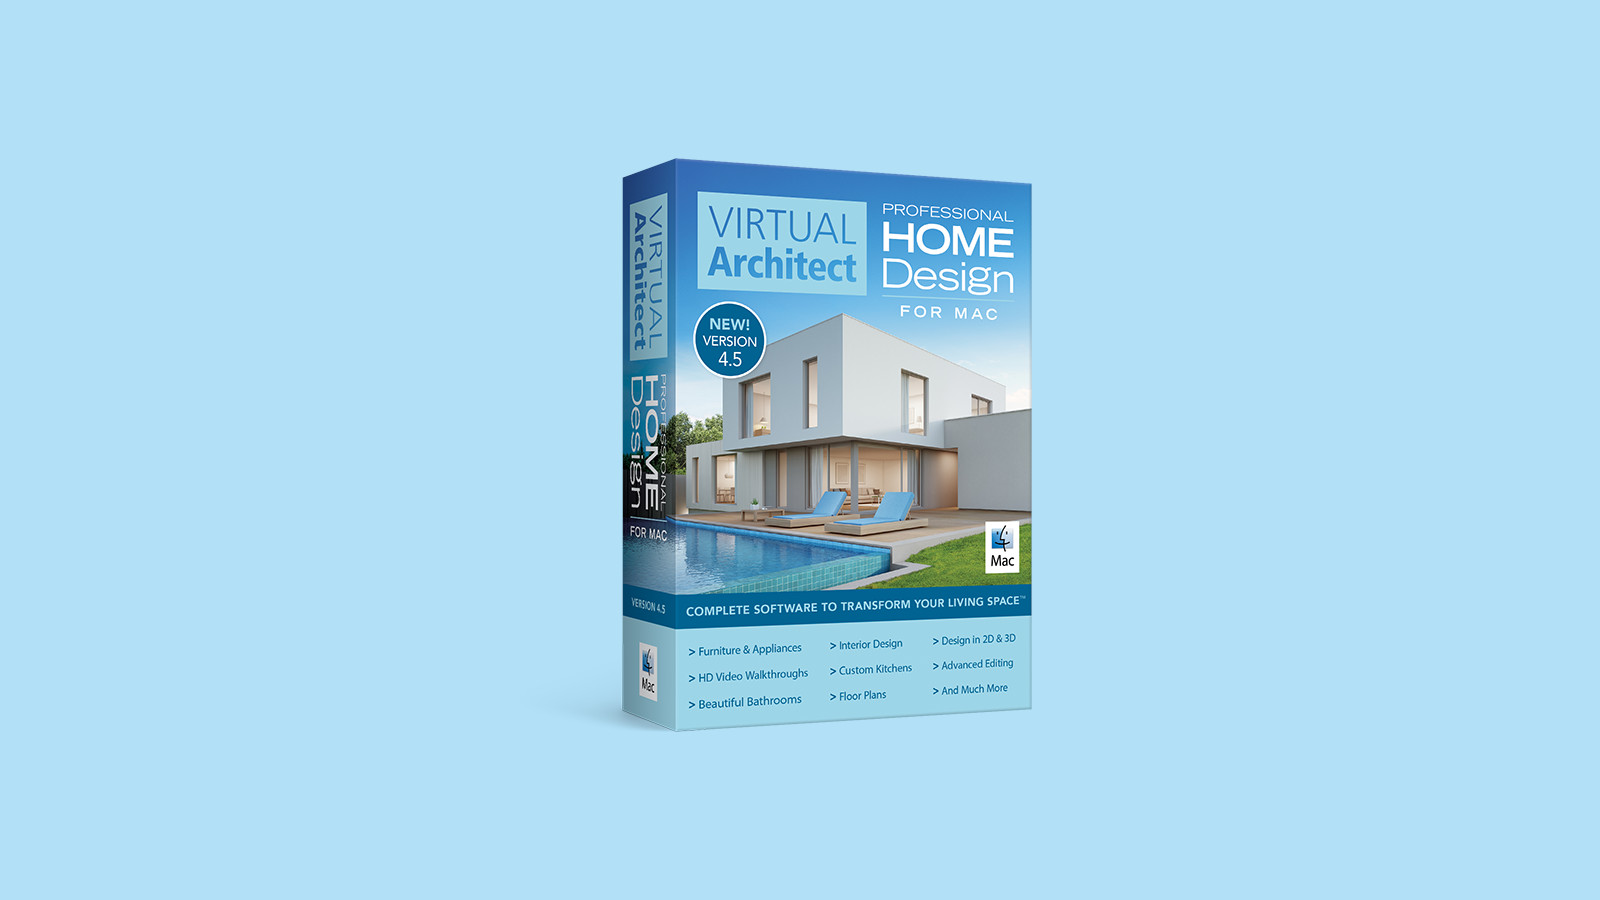 Virtual Architect Professional Home Design for Mac CD Key $64.8